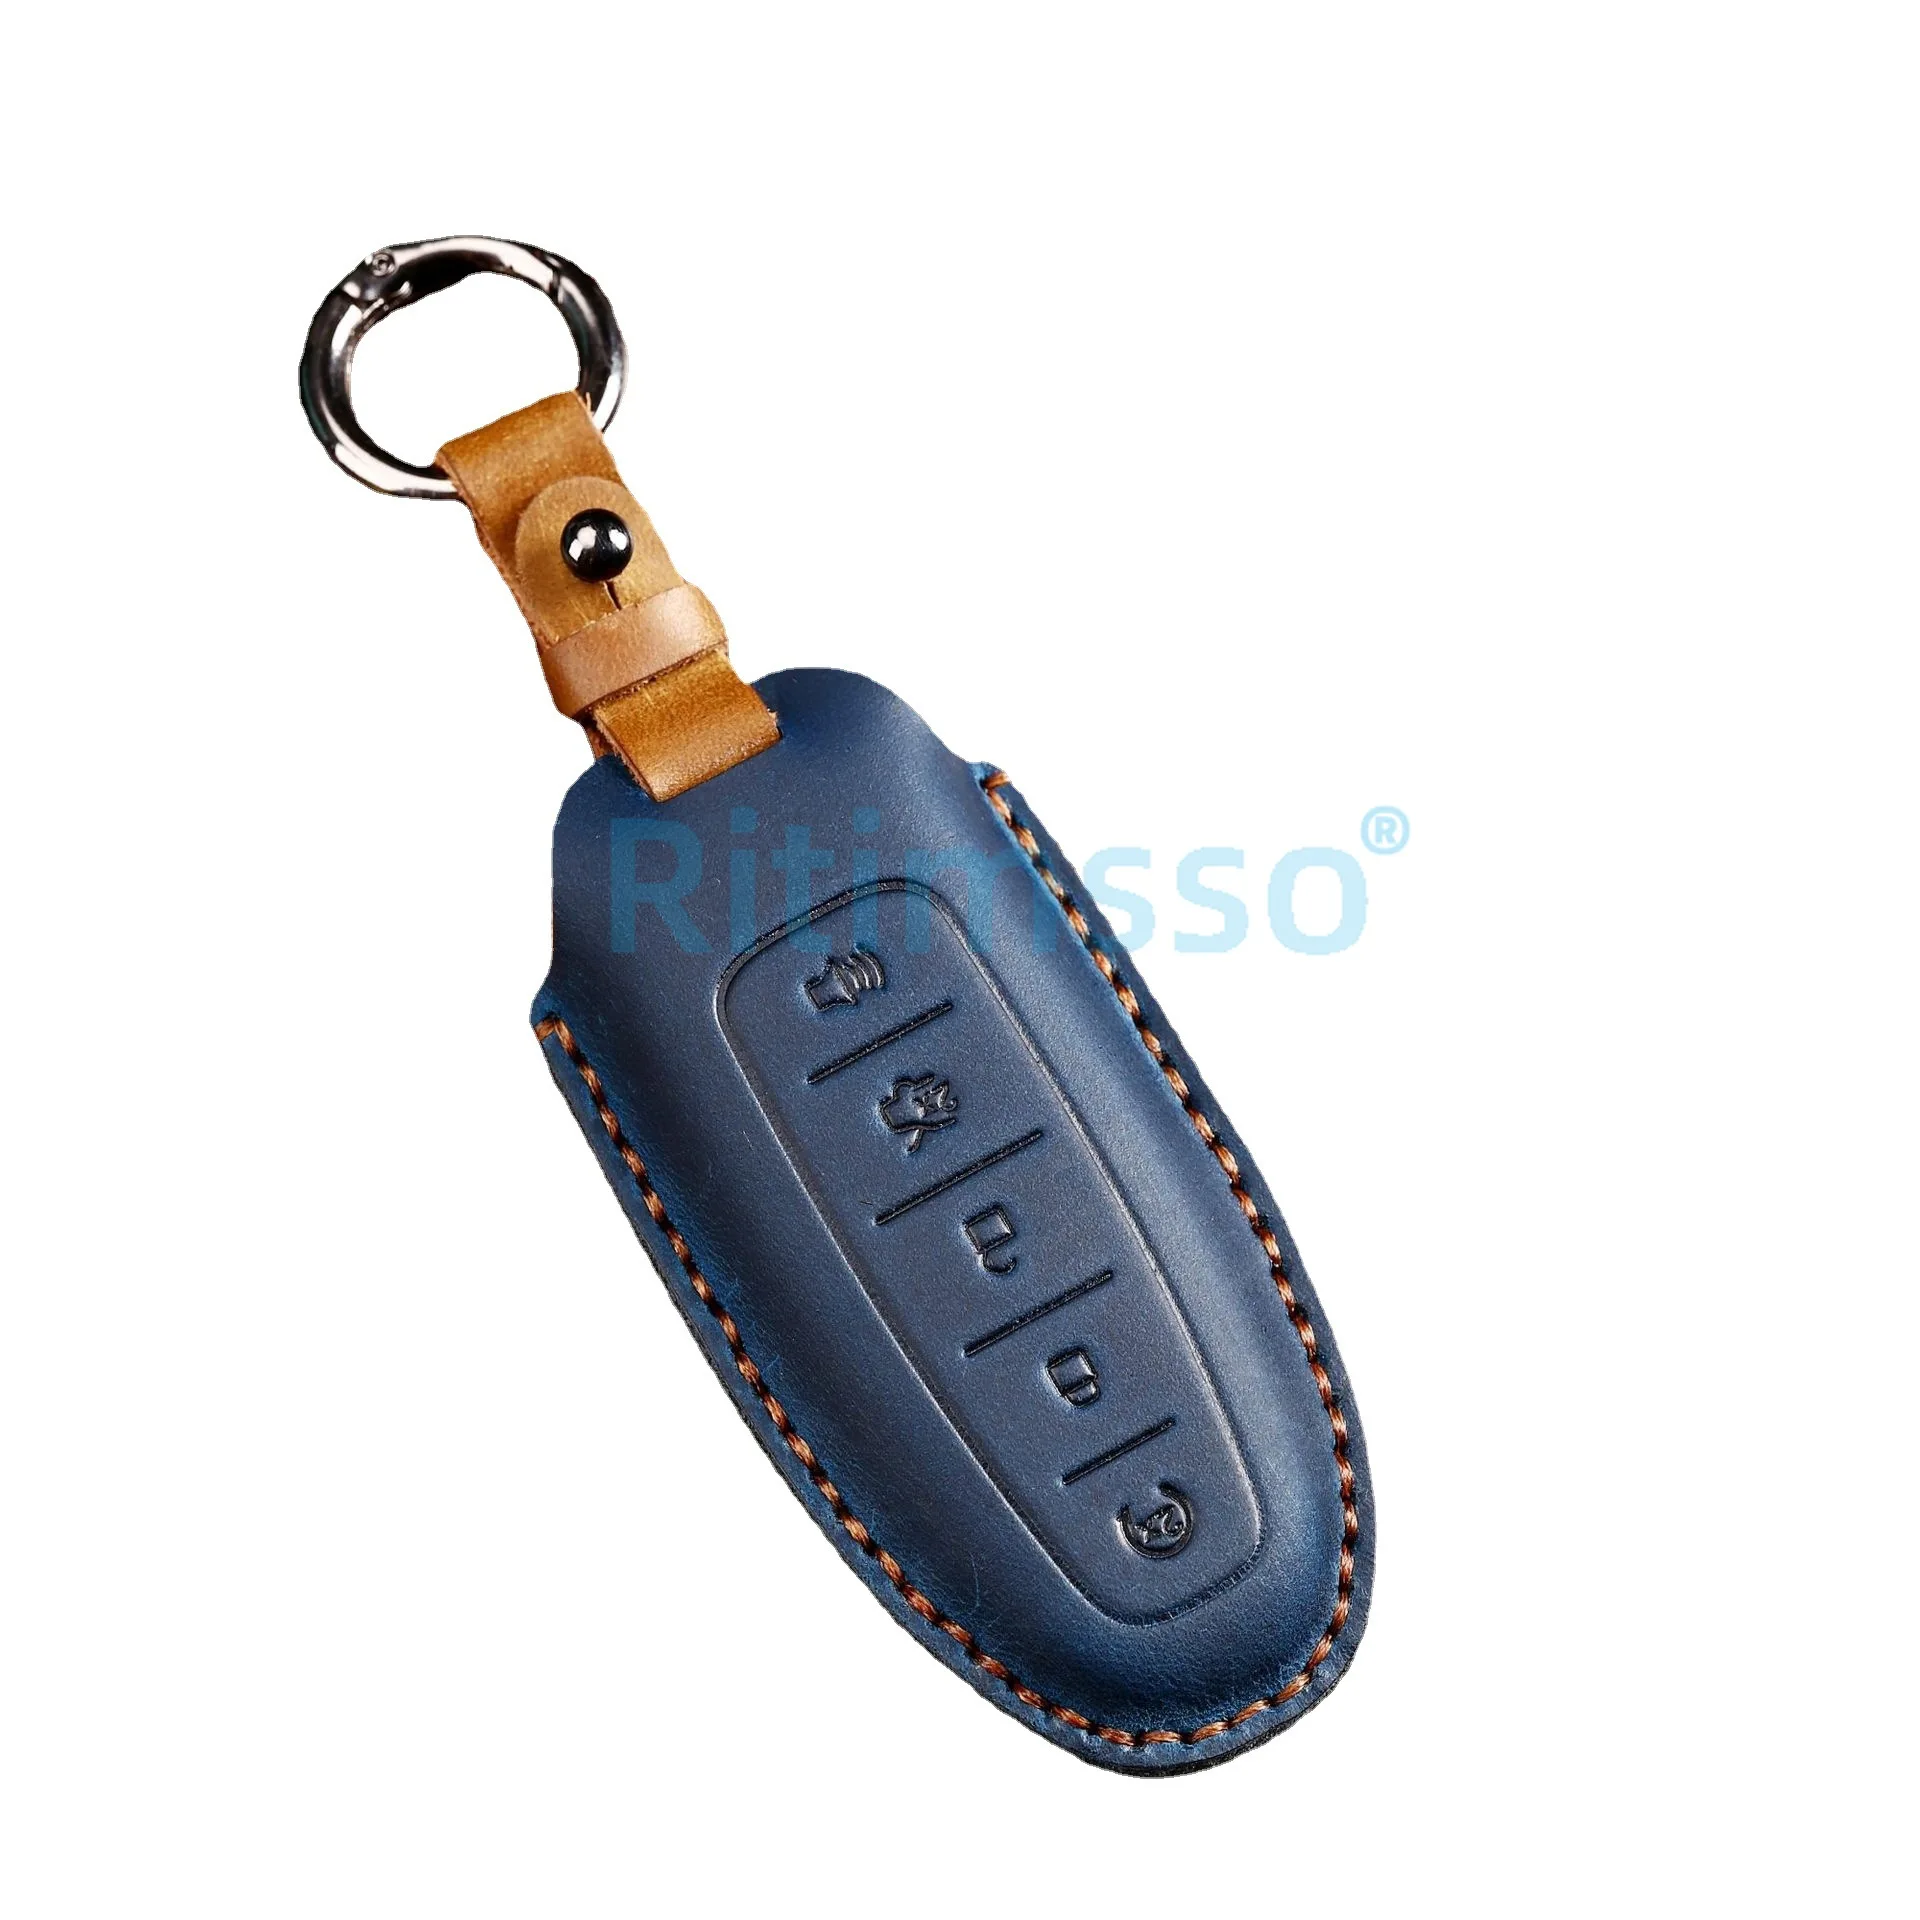  RUSTIC TOWN Leather Key Holder - Smart Fob Car Key